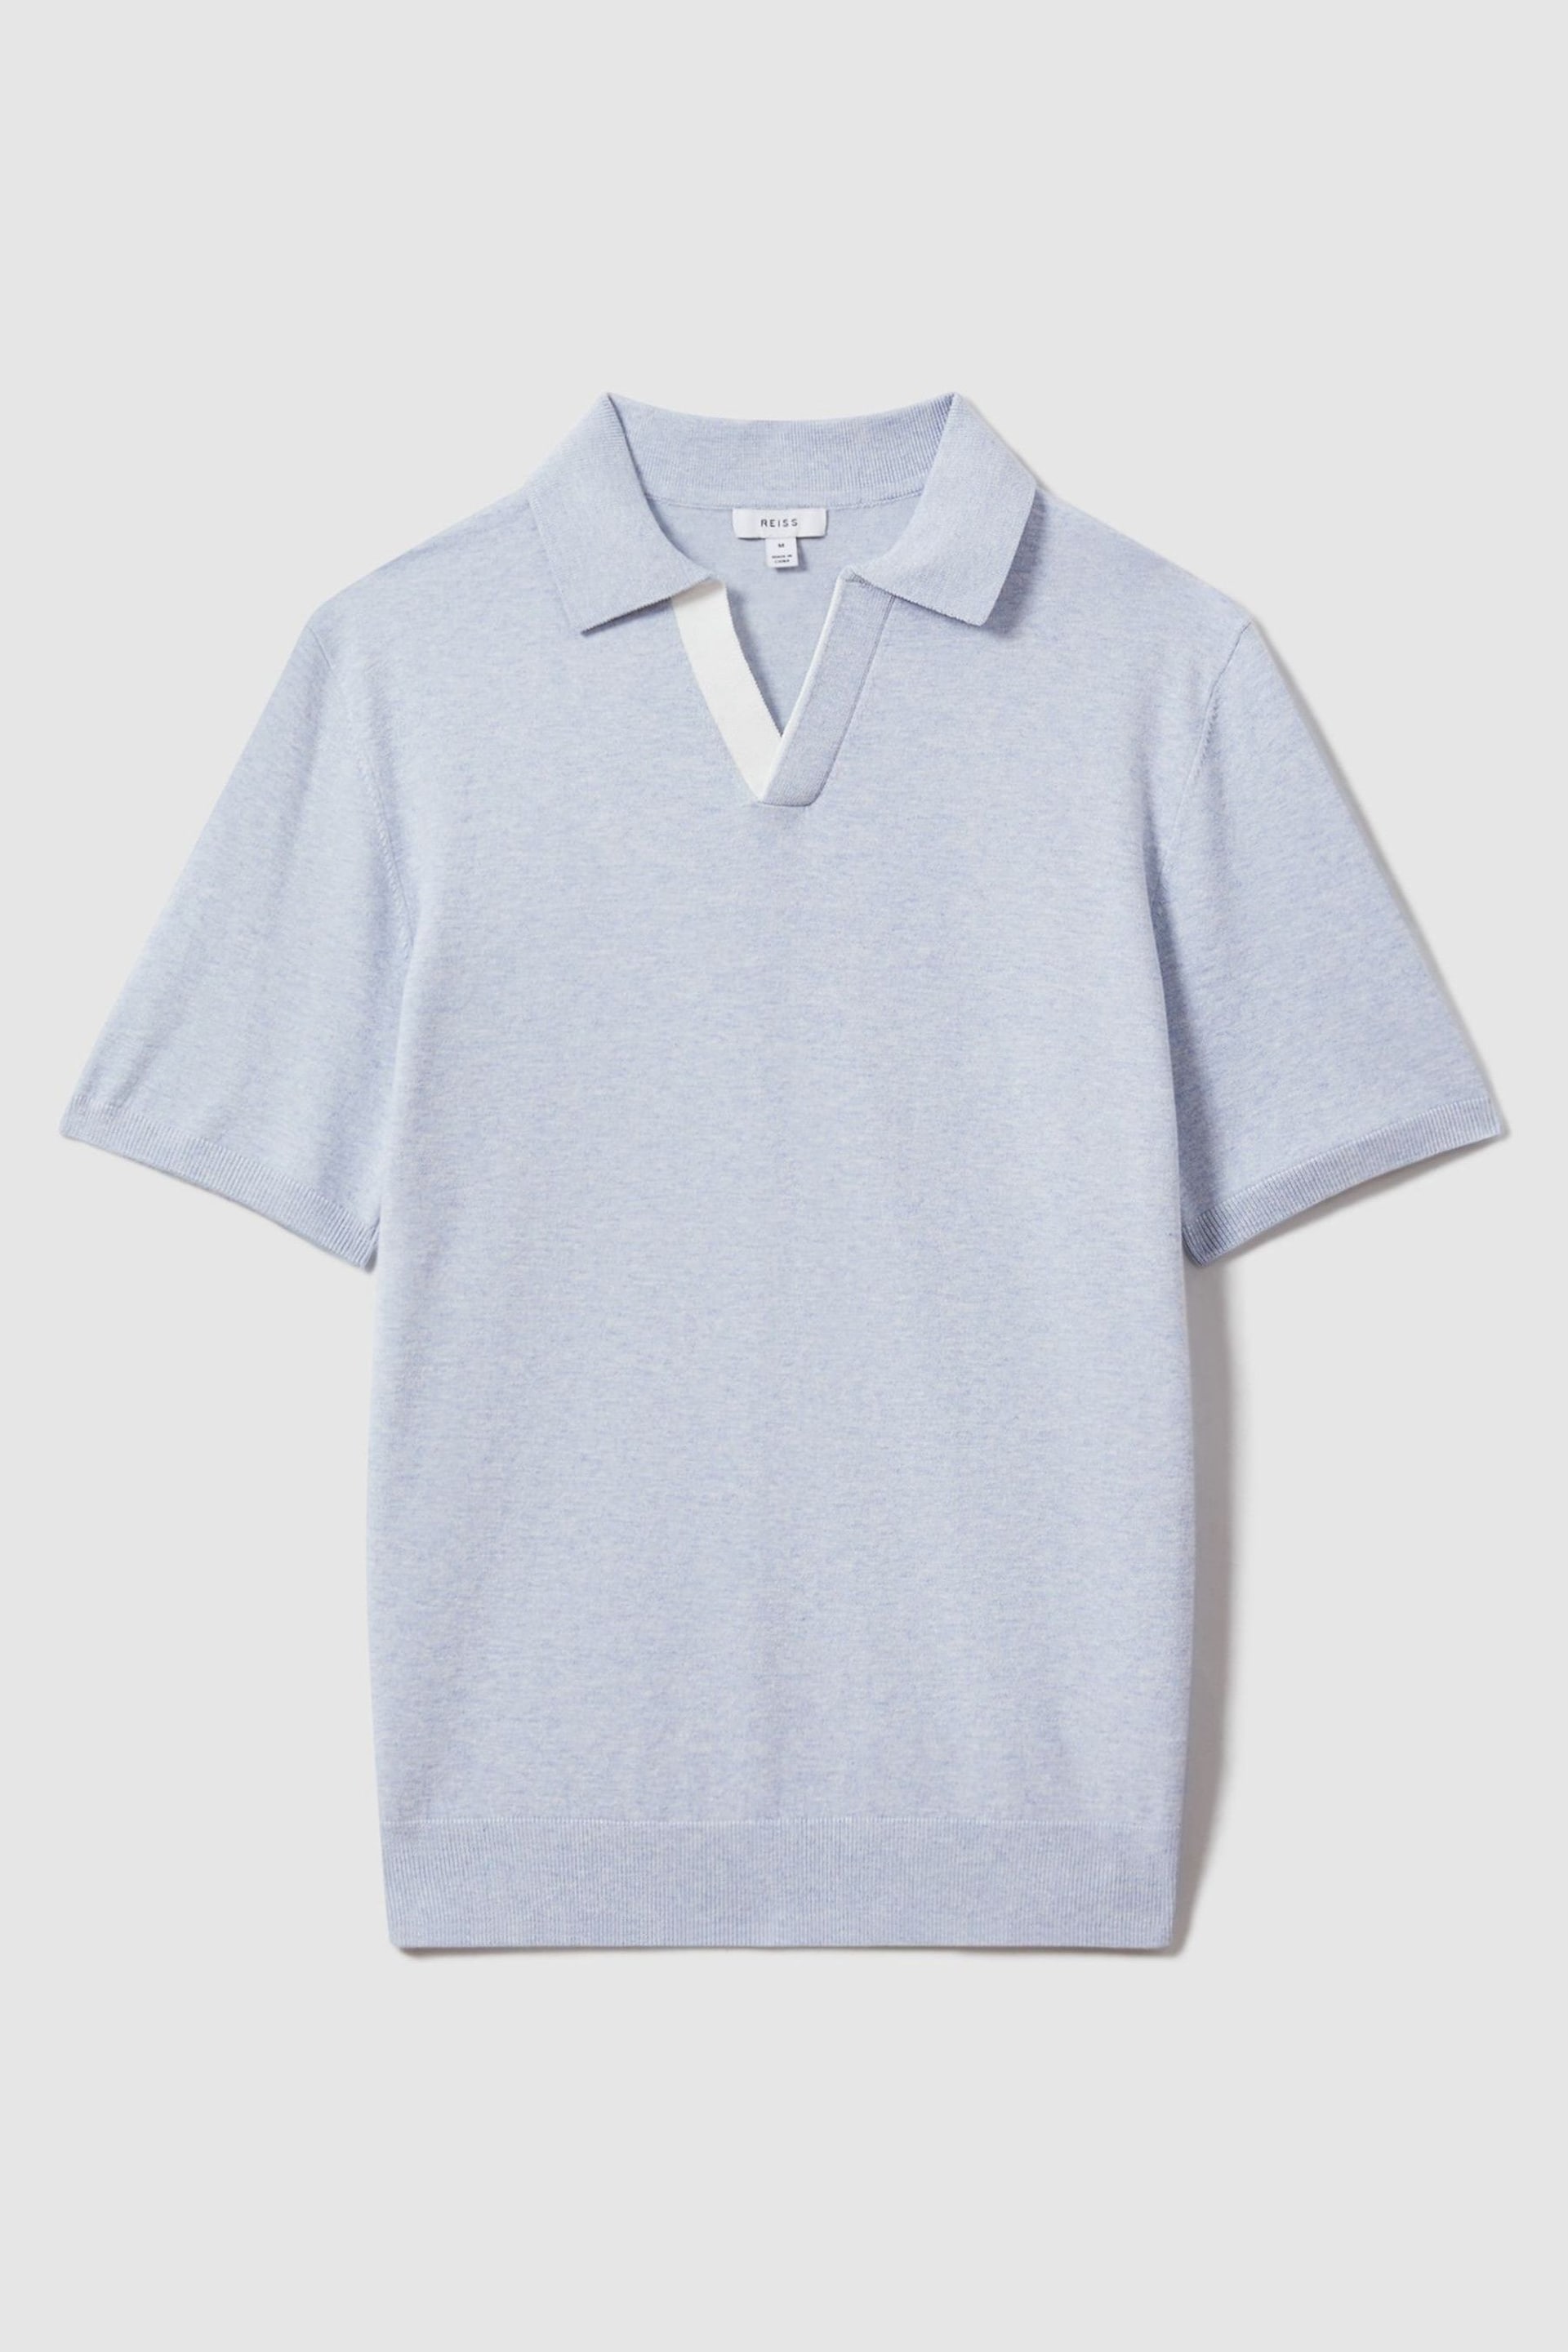 Reiss Soft Blue Boston Cotton Blend Contrast Open Collar Shirt - Image 2 of 6